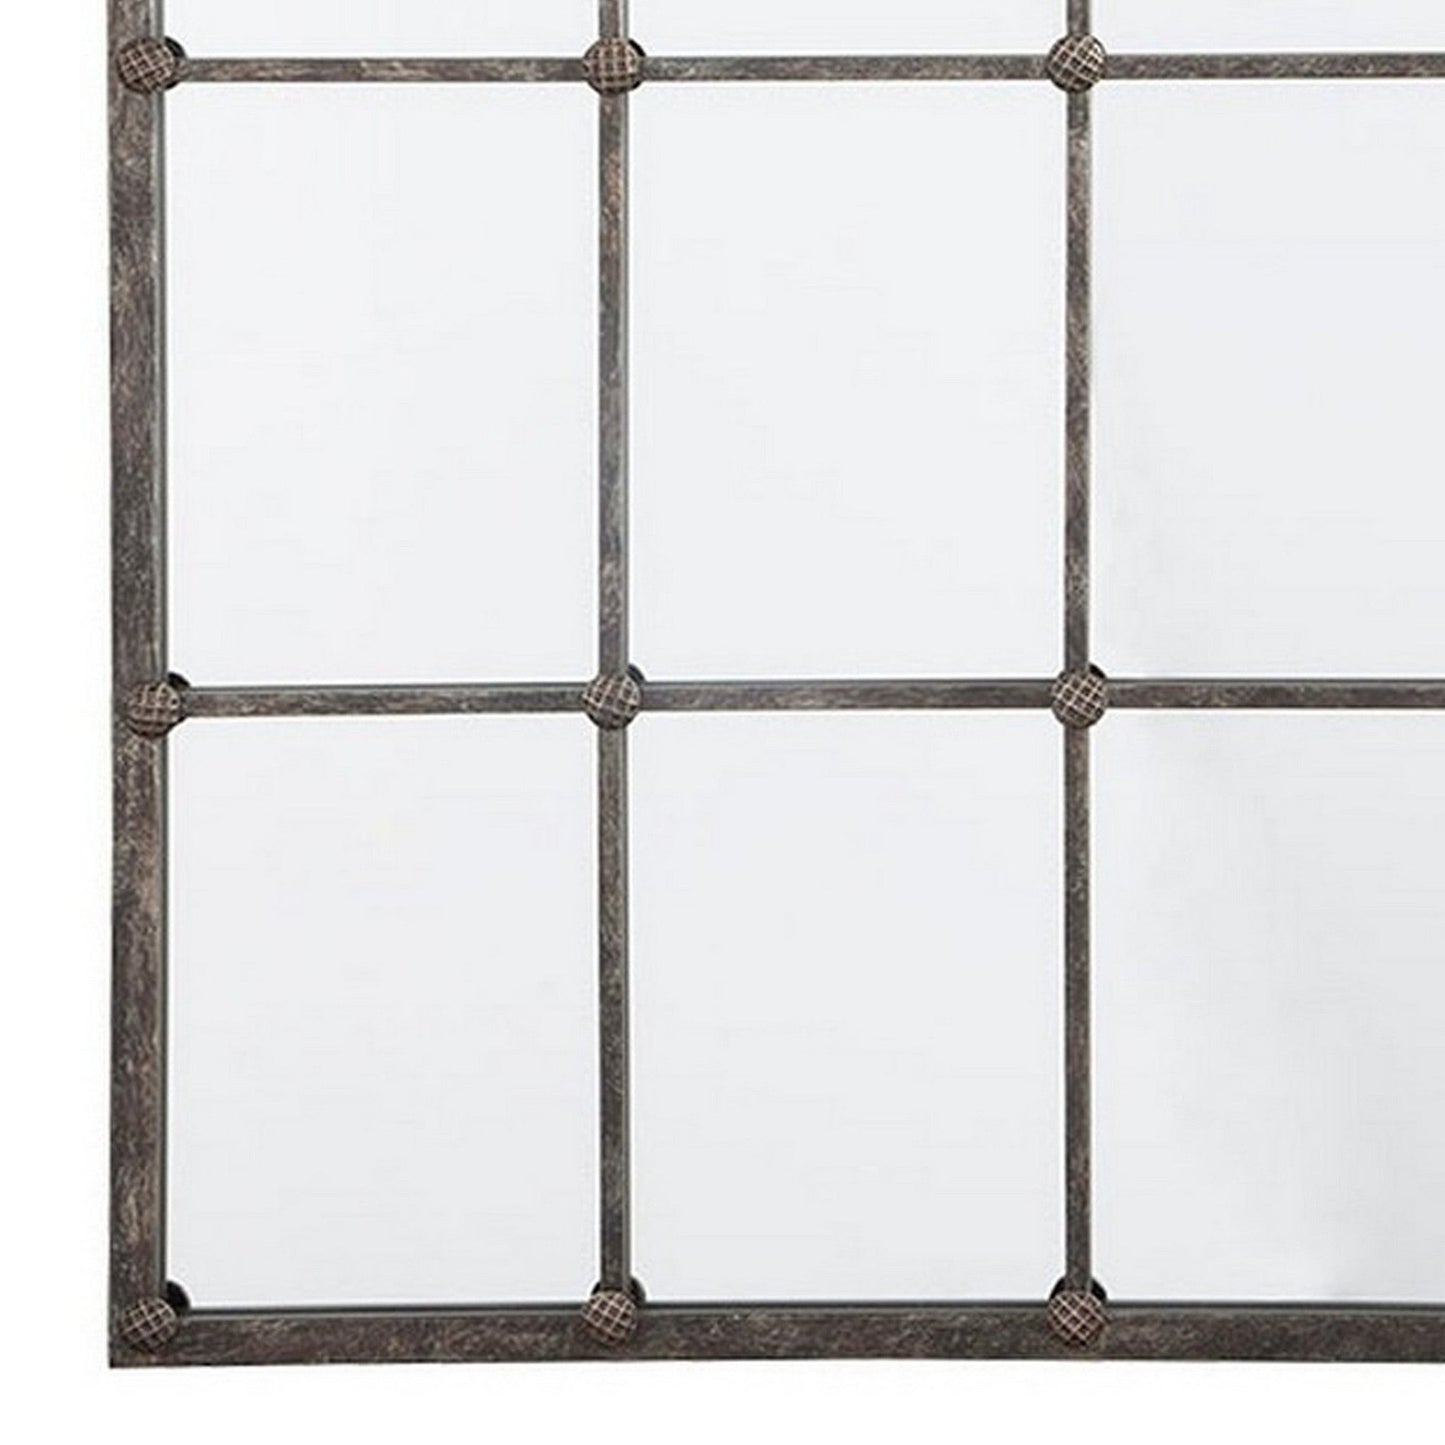 Benzara Arched Window Pane Metal Accent Mirror